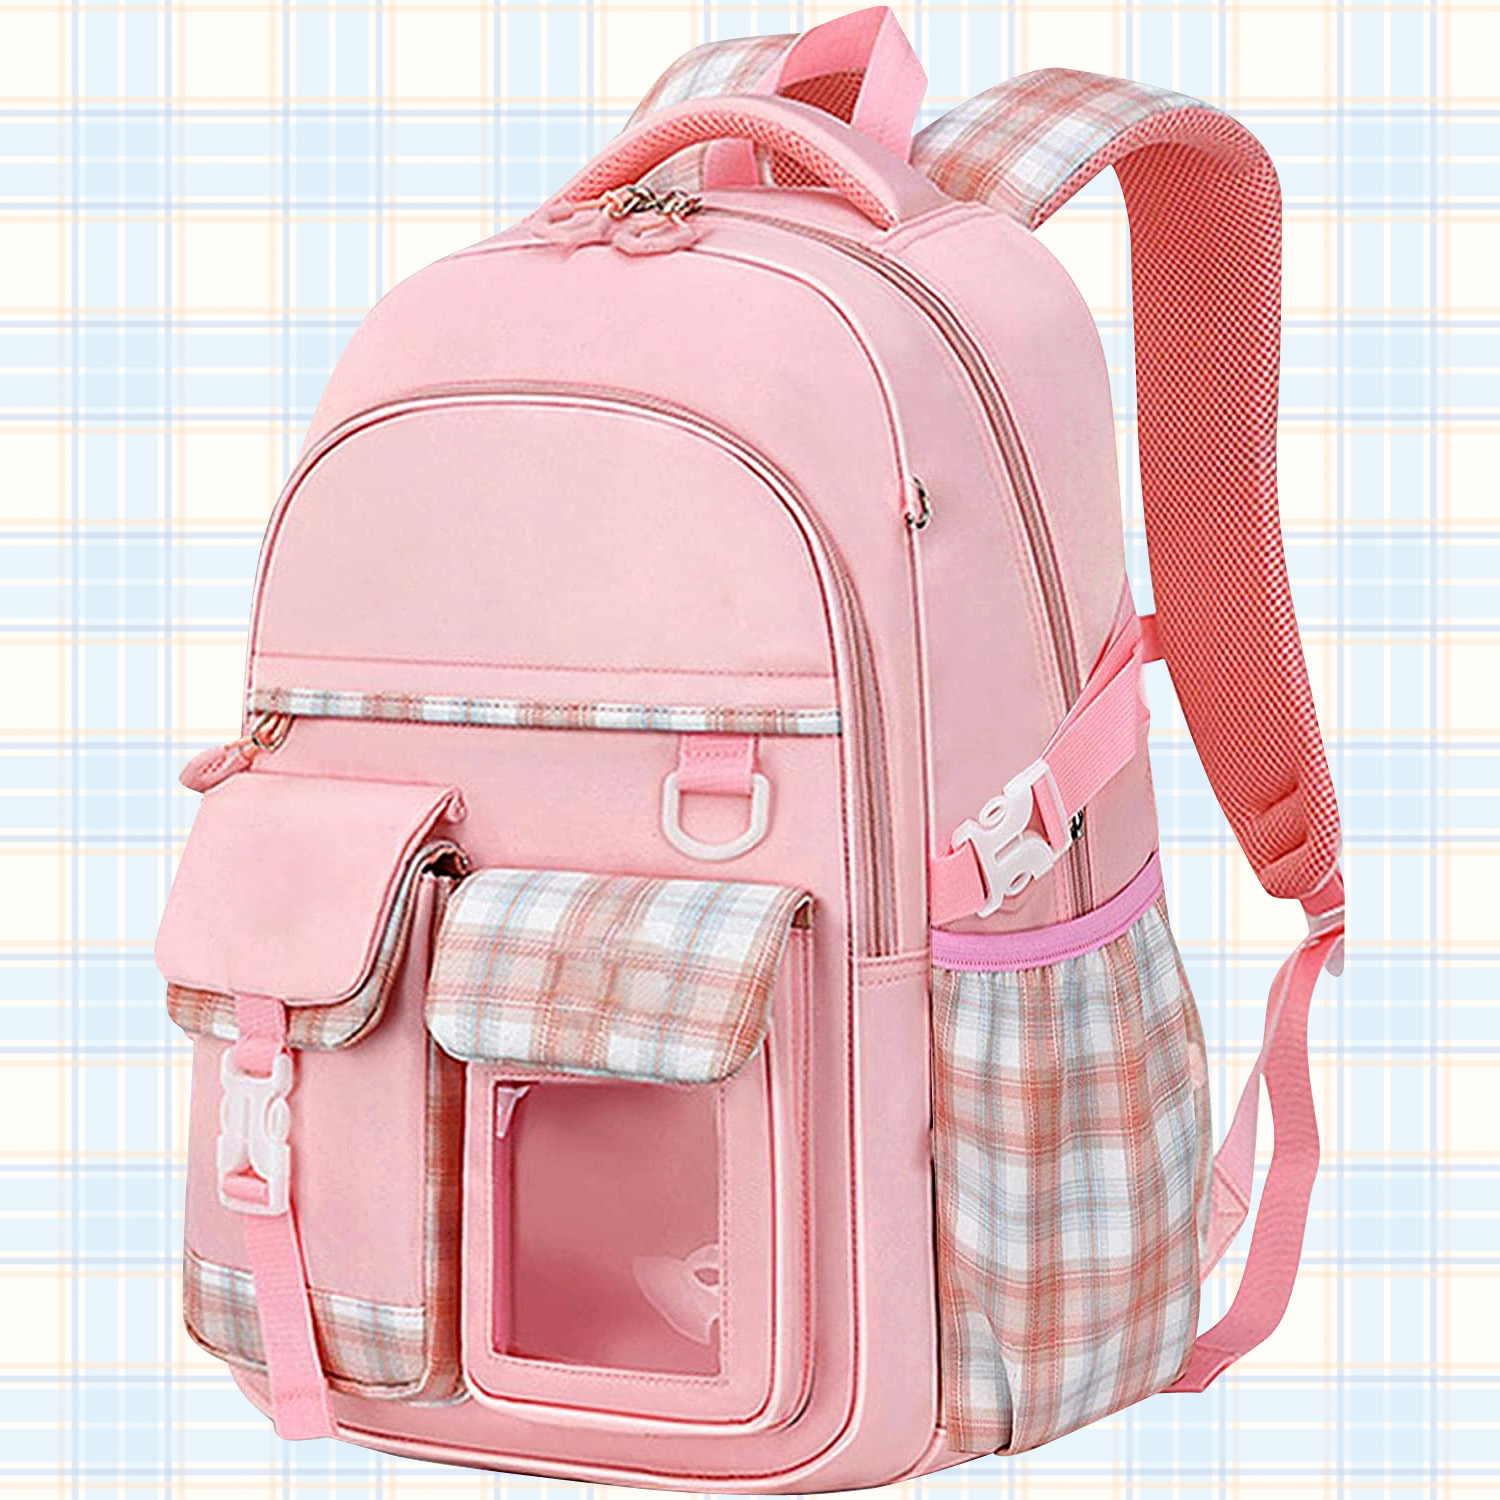 Large Deluxe Backpack Girl's Cute School Bag (Pink)